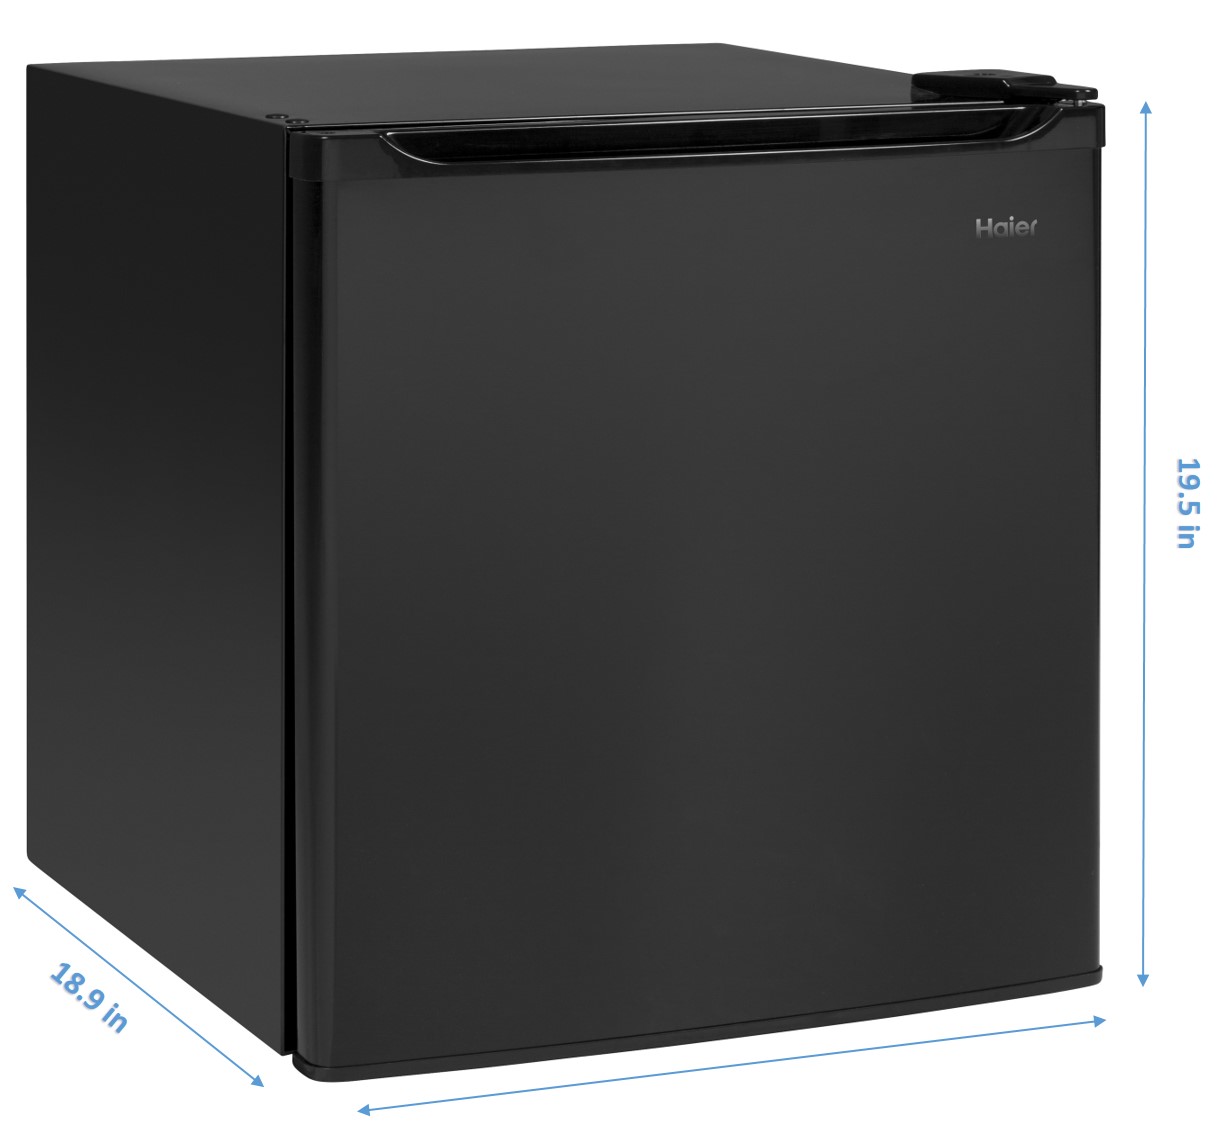 Haier 1.7 Cu Ft Single Door Compact Refrigerator QHE02GGMBB, Black